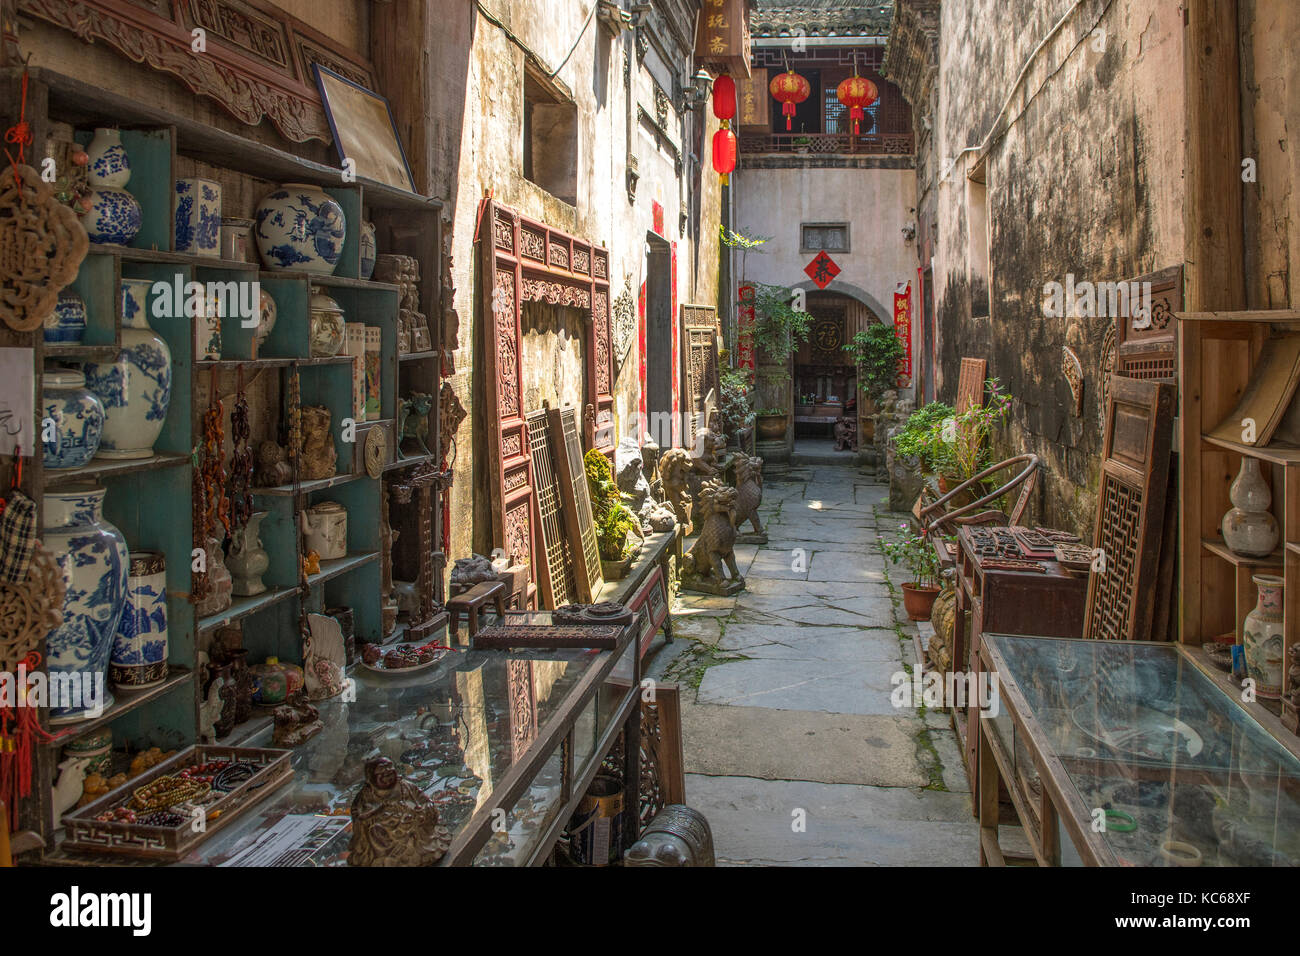 Inside Antiques Shop in Xidi, Huangshan, China Stock Photo